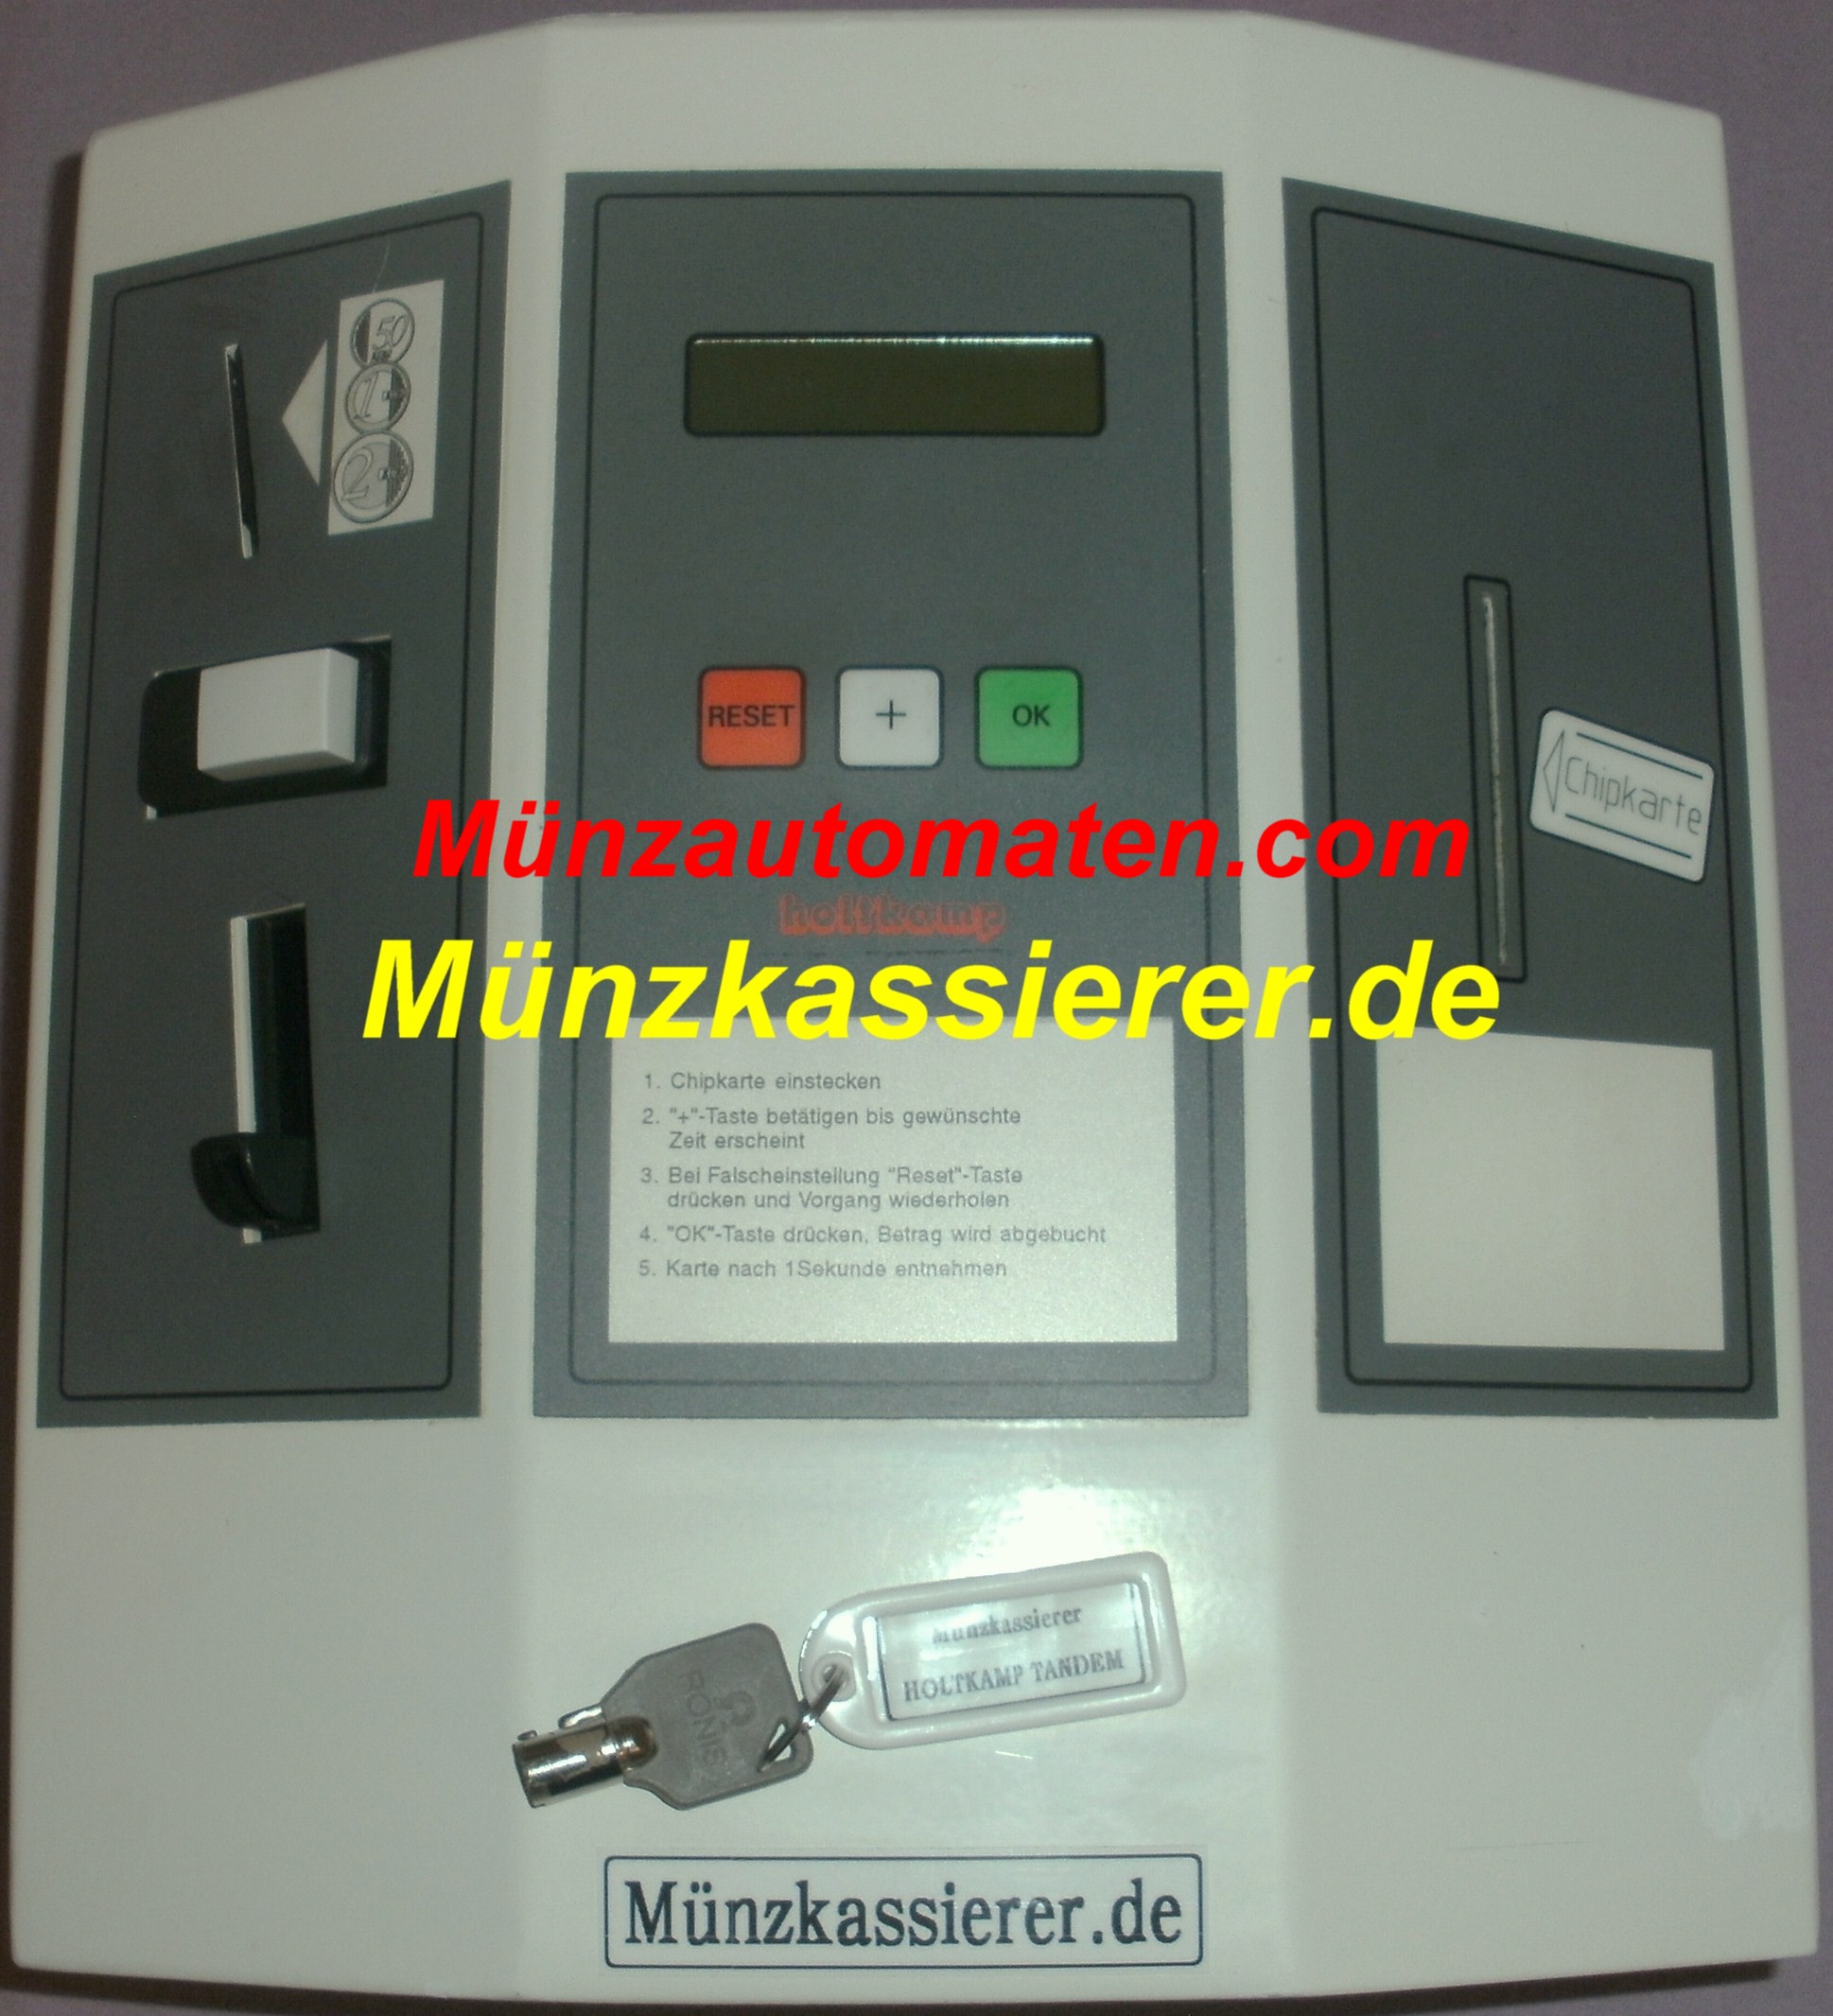 Münzkassierer.de Münzautomaten.com Münzautomat-Waschmaschine.de Waschmaschine Trockner